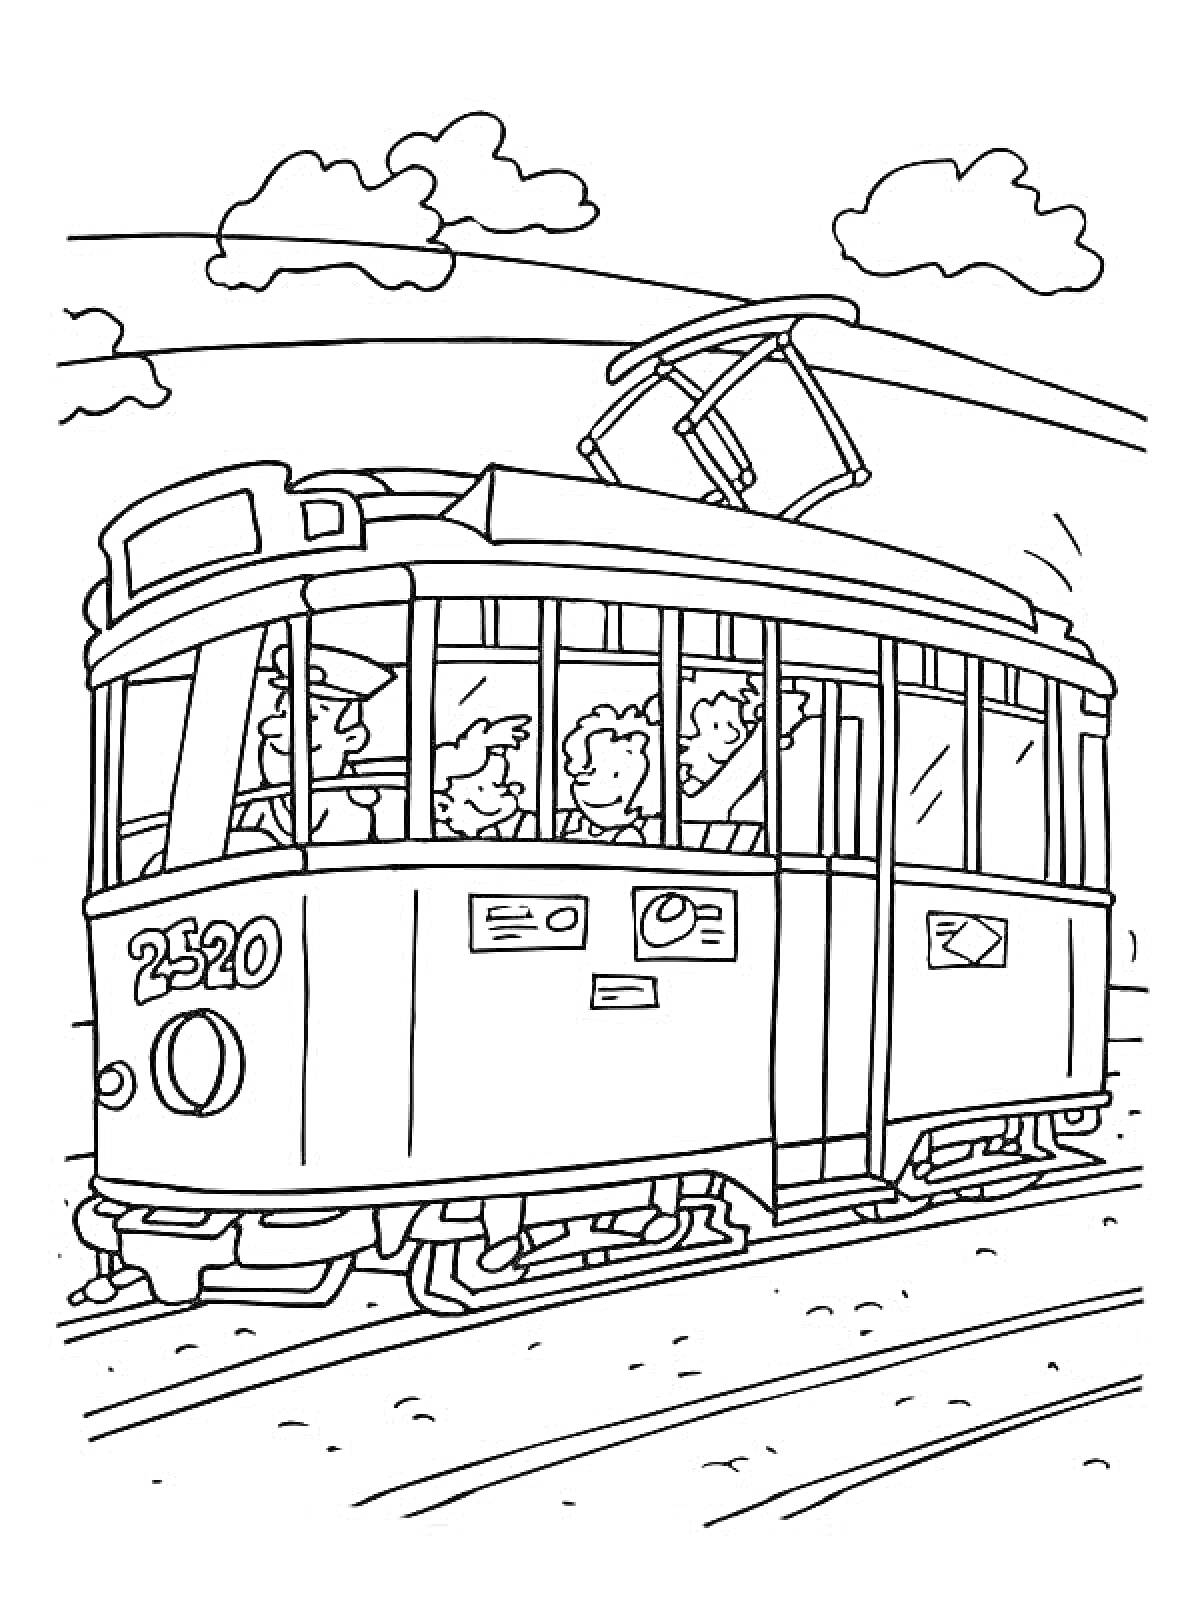 Раскраска Трамвай с пассажирами на рельсах с водителем и облаками на заднем плане